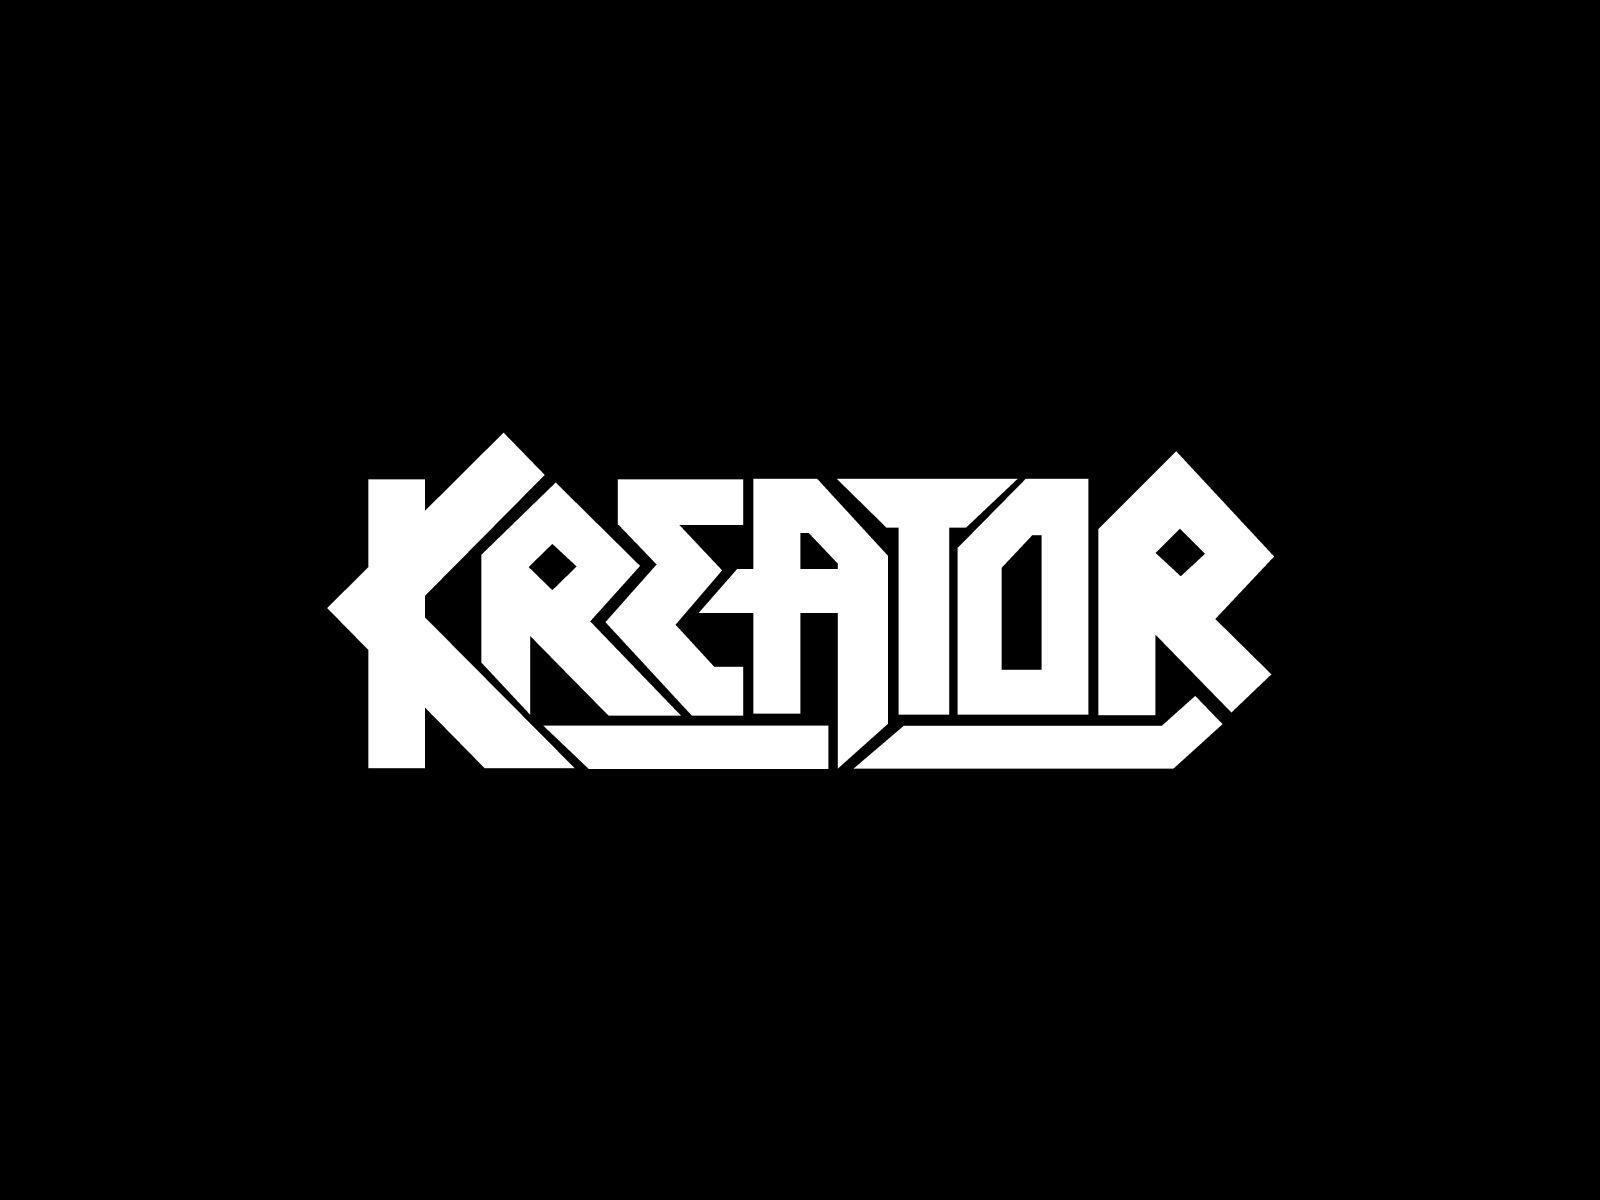 Kreator logo and wallpaper. Band logos band logos, metal